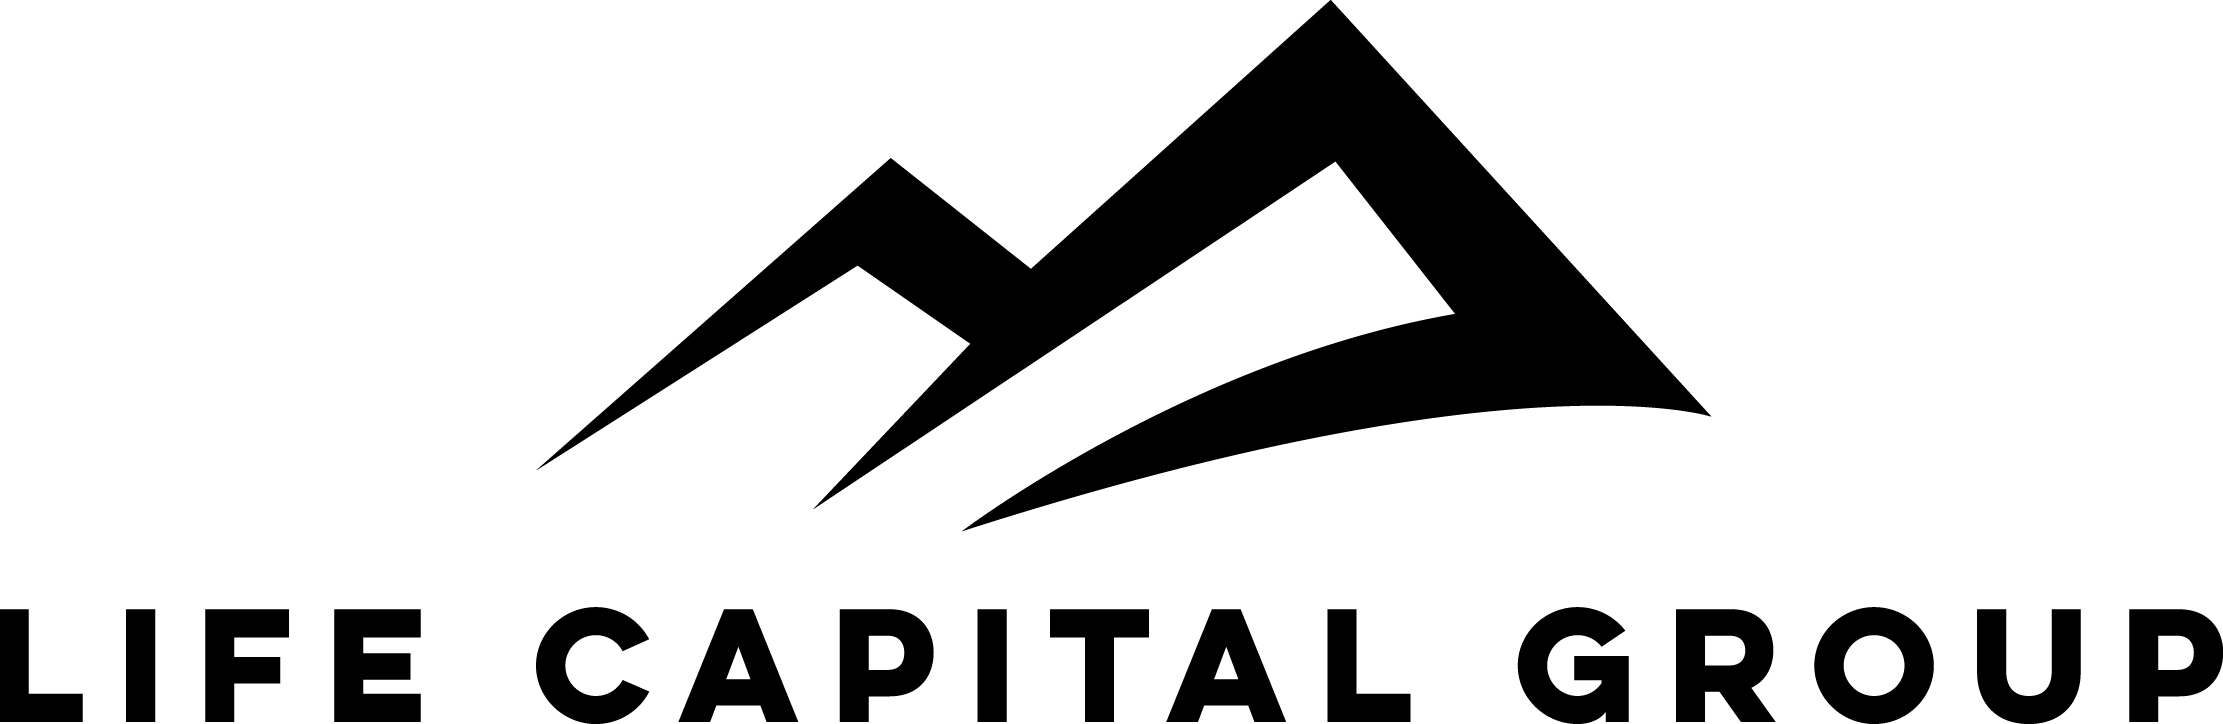 Capital Financial Indonesia